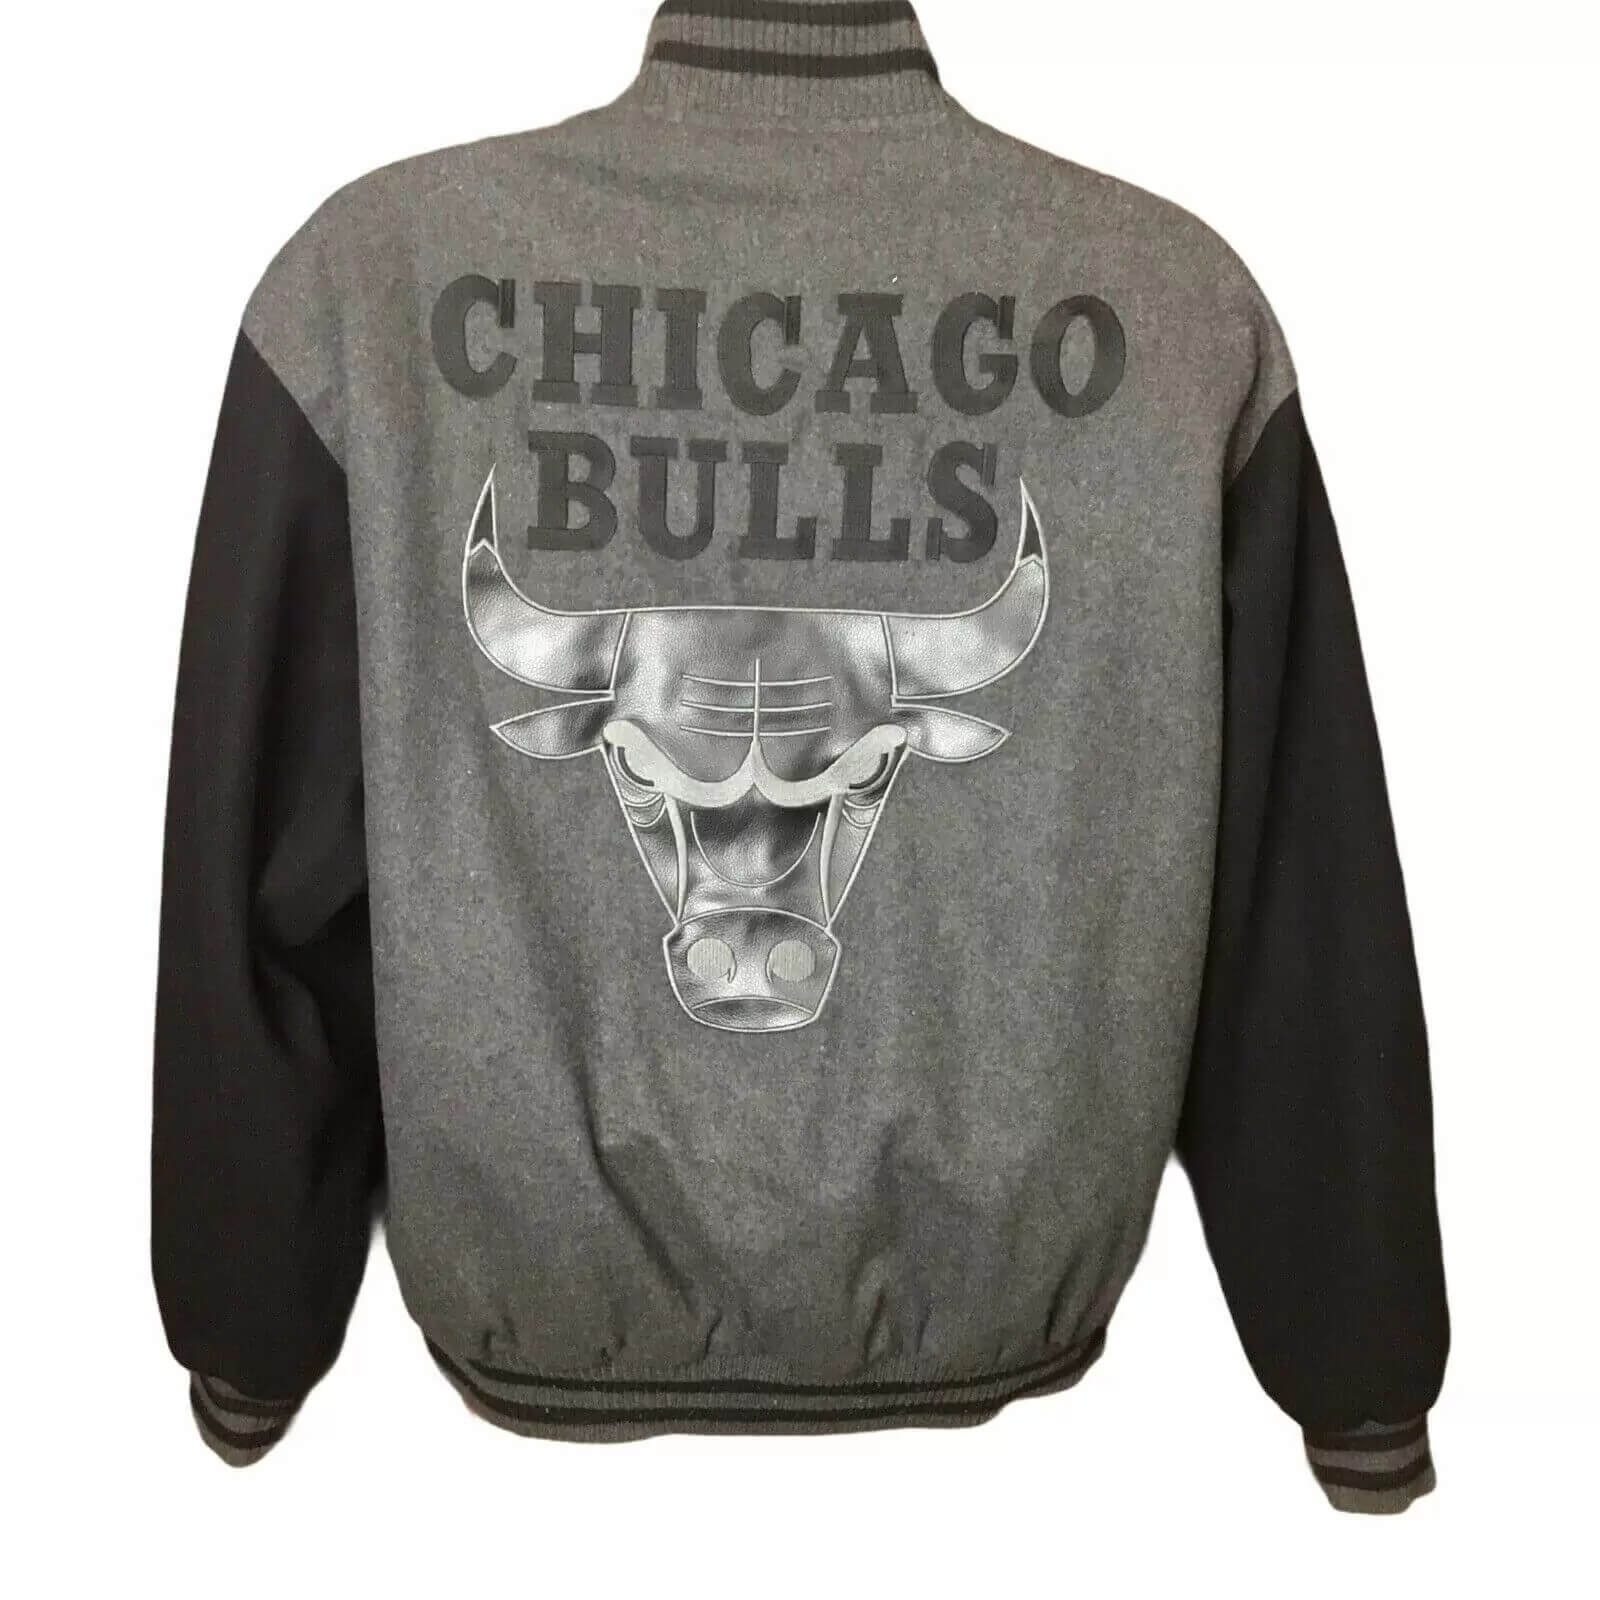 Maker of Jacket NBA Teams Jackets Chicago Bulls Vintage Black Varsity Letterman